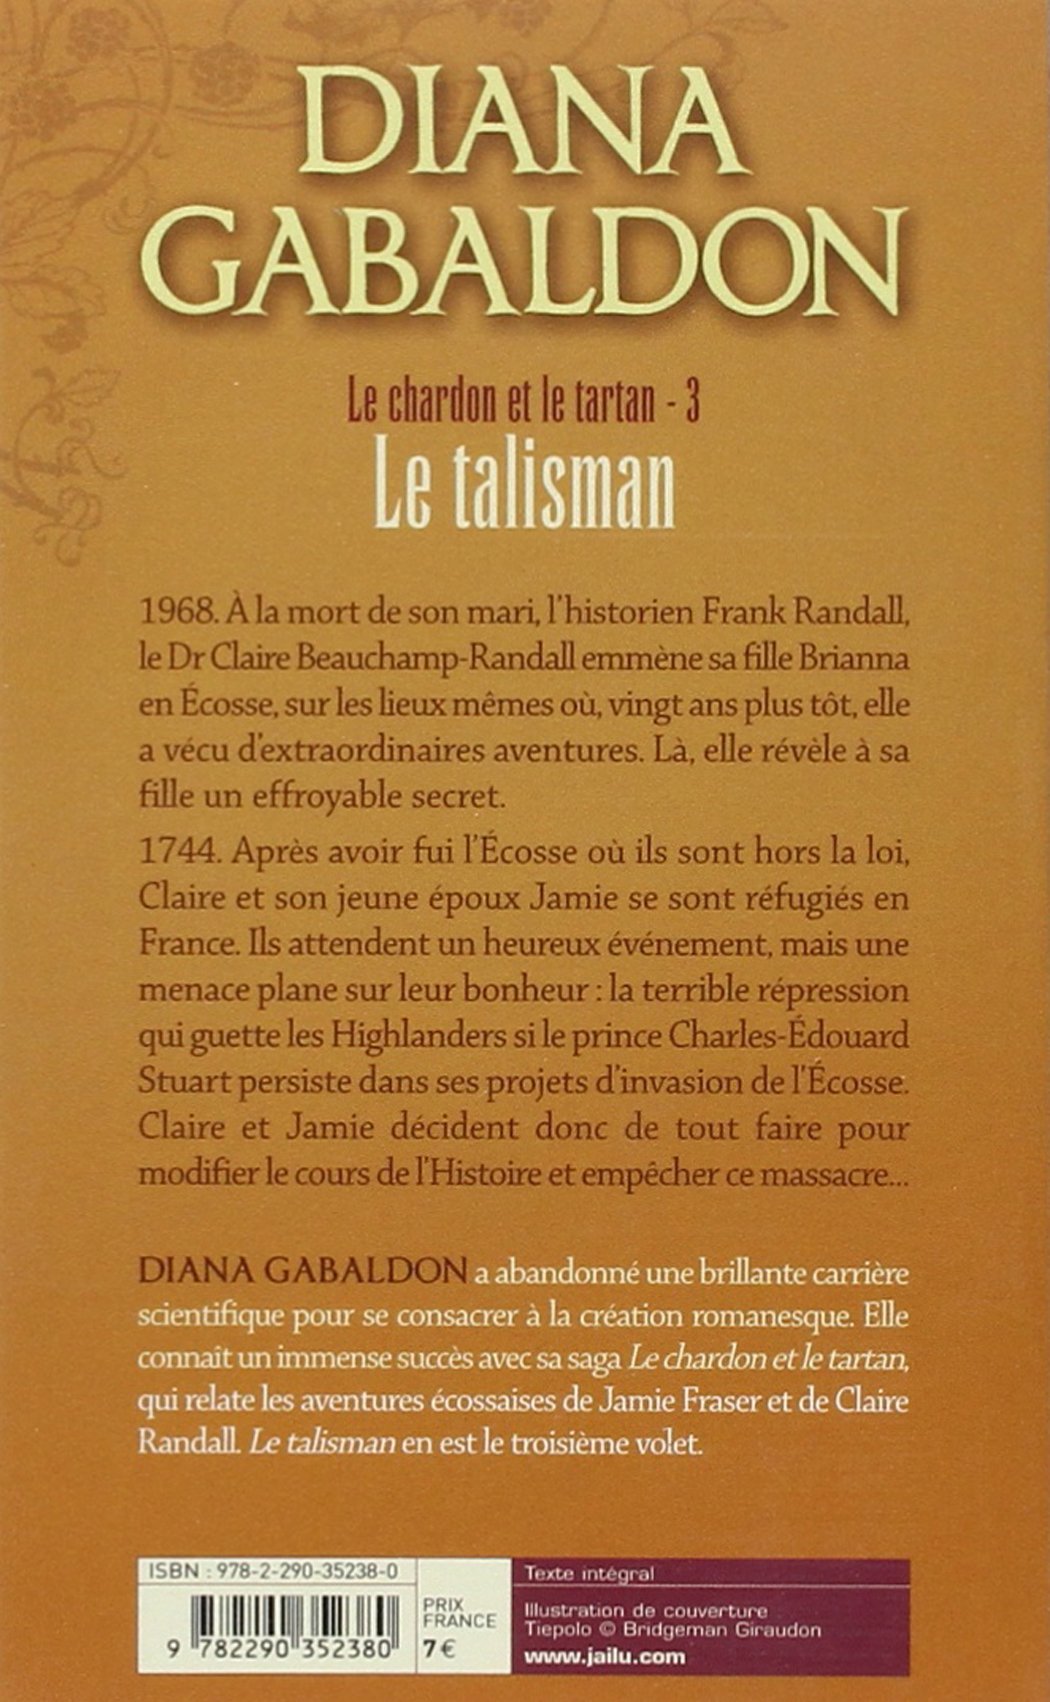 La chardon et le tartan # 3 : Le talisman (Diana Gabaldon)